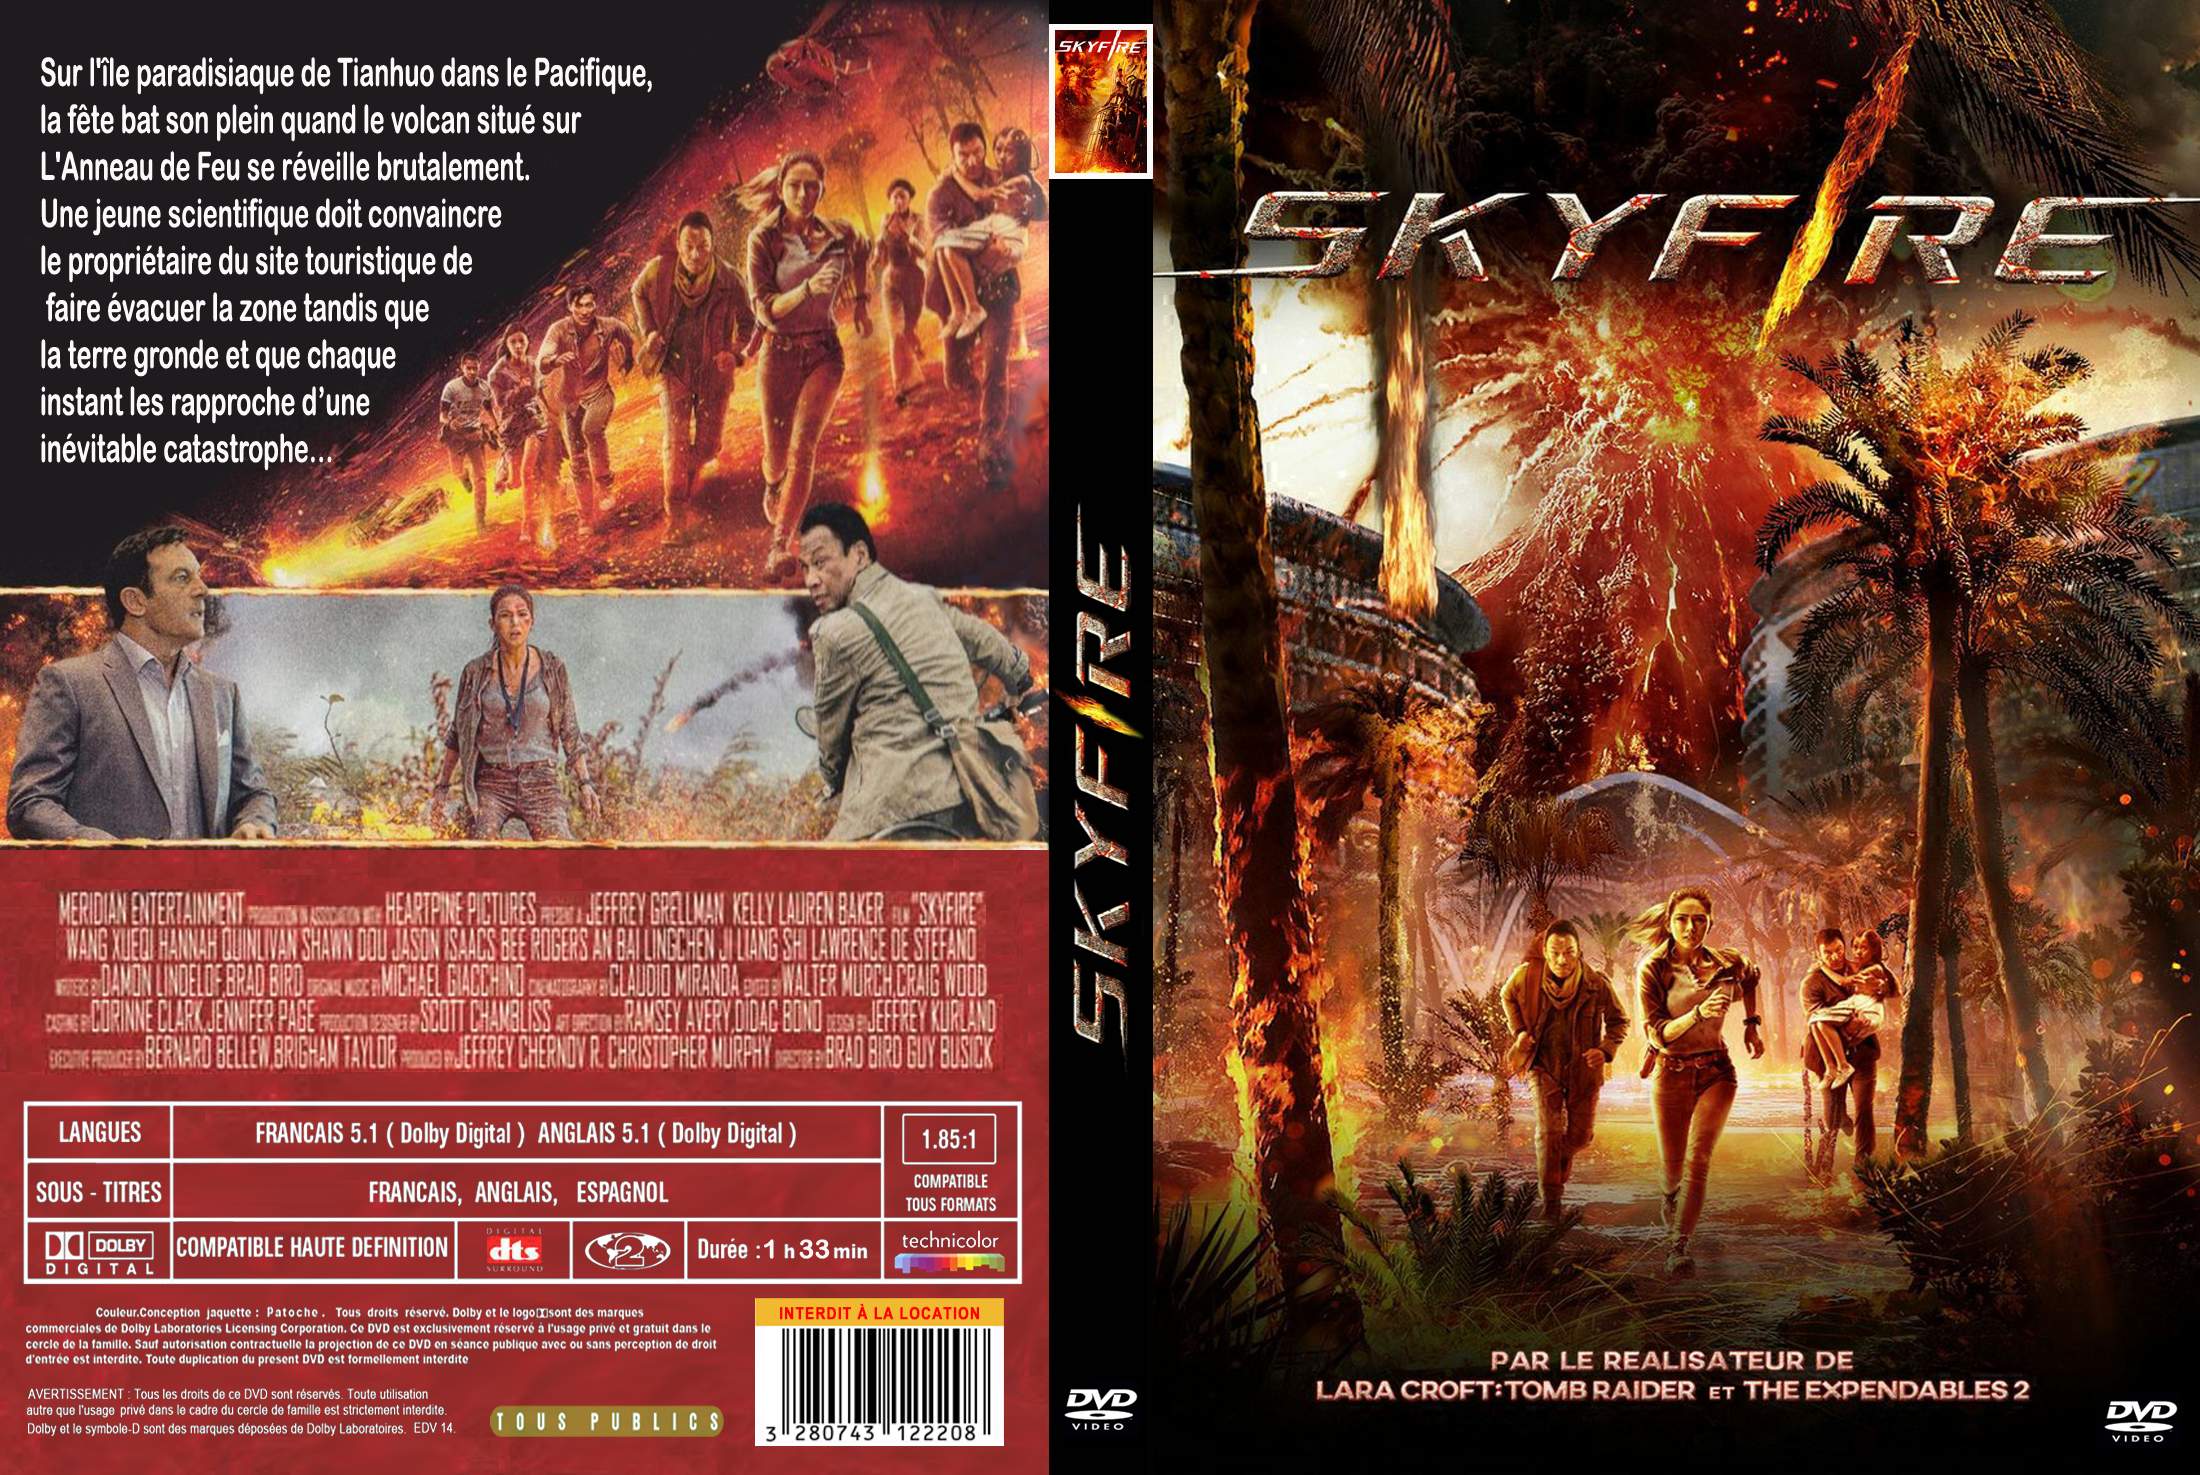 Jaquette DVD Skyfire custom